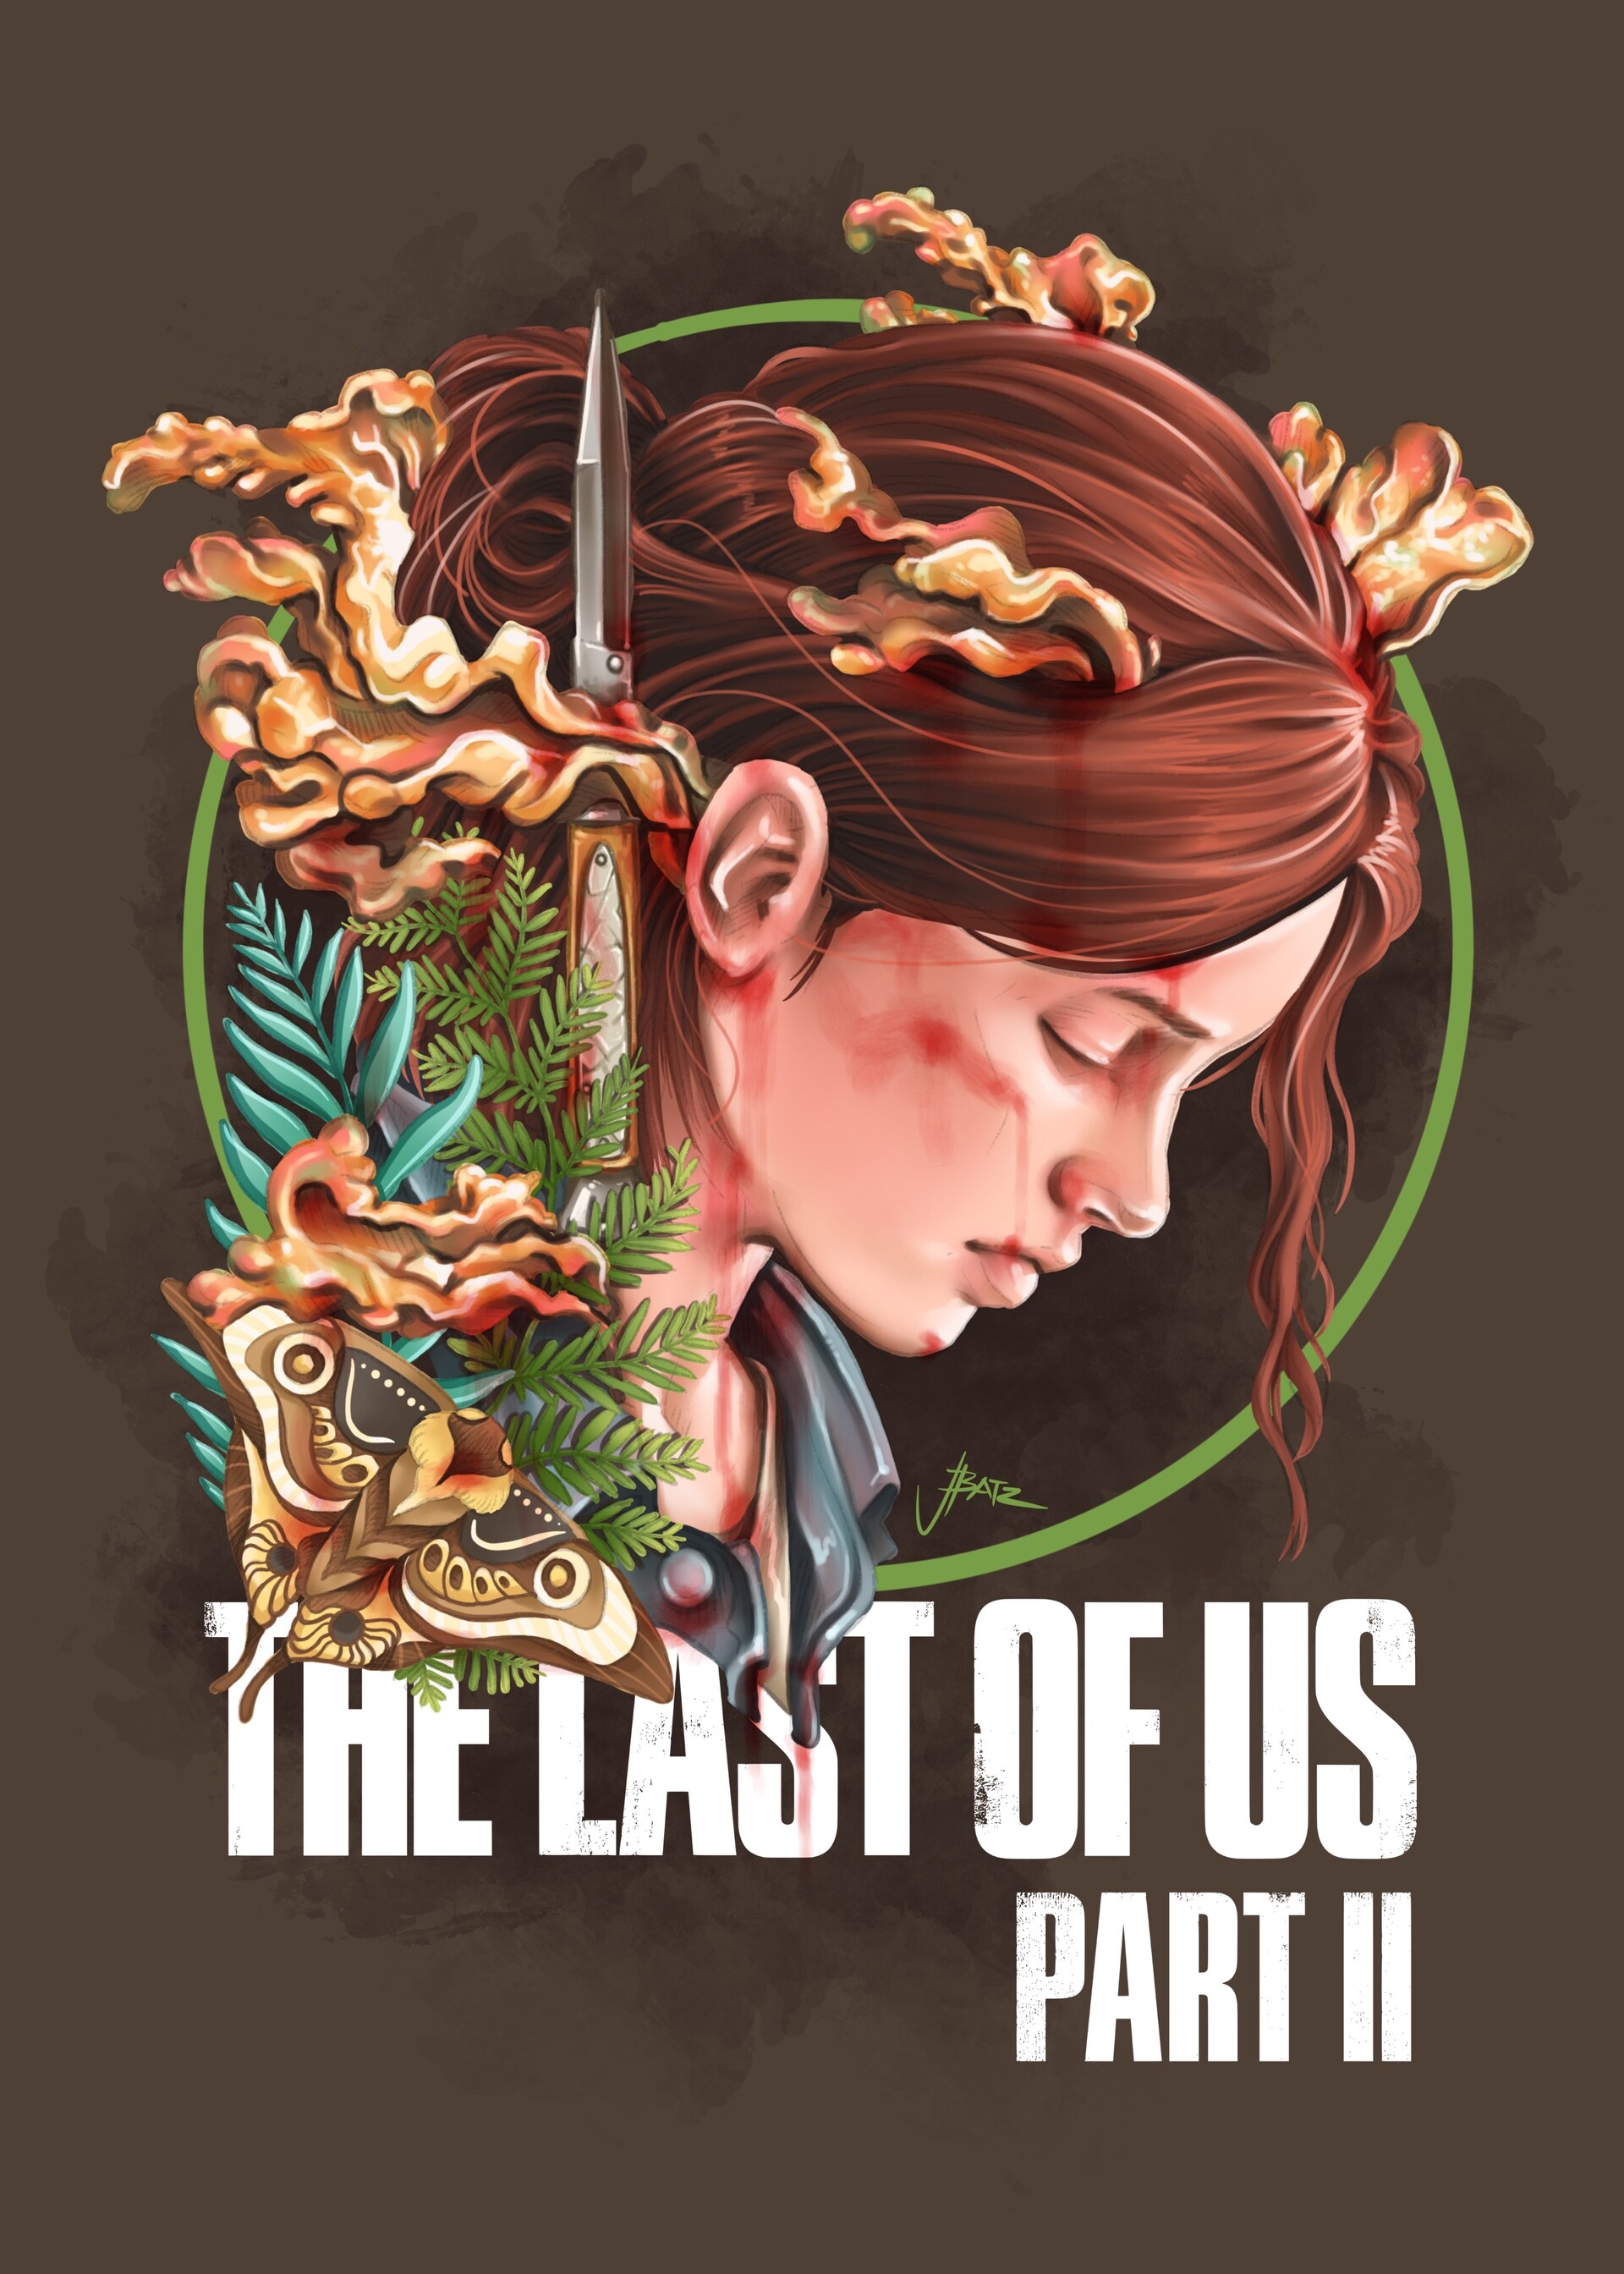 ArtStation - Ellie - The Last of Us Part II FANART